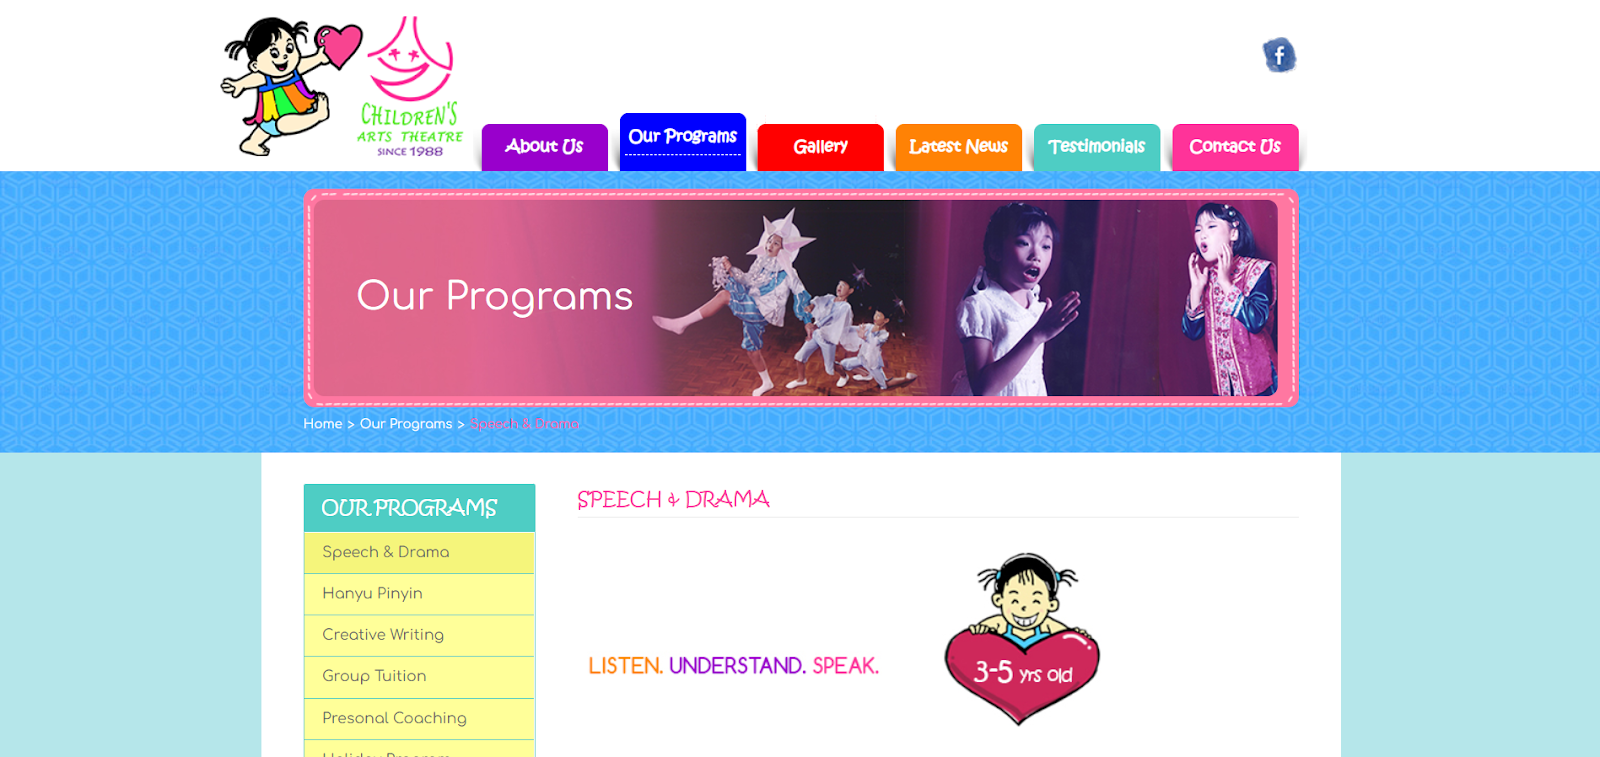 best speech and drama classes in singapore_children's arts theatre